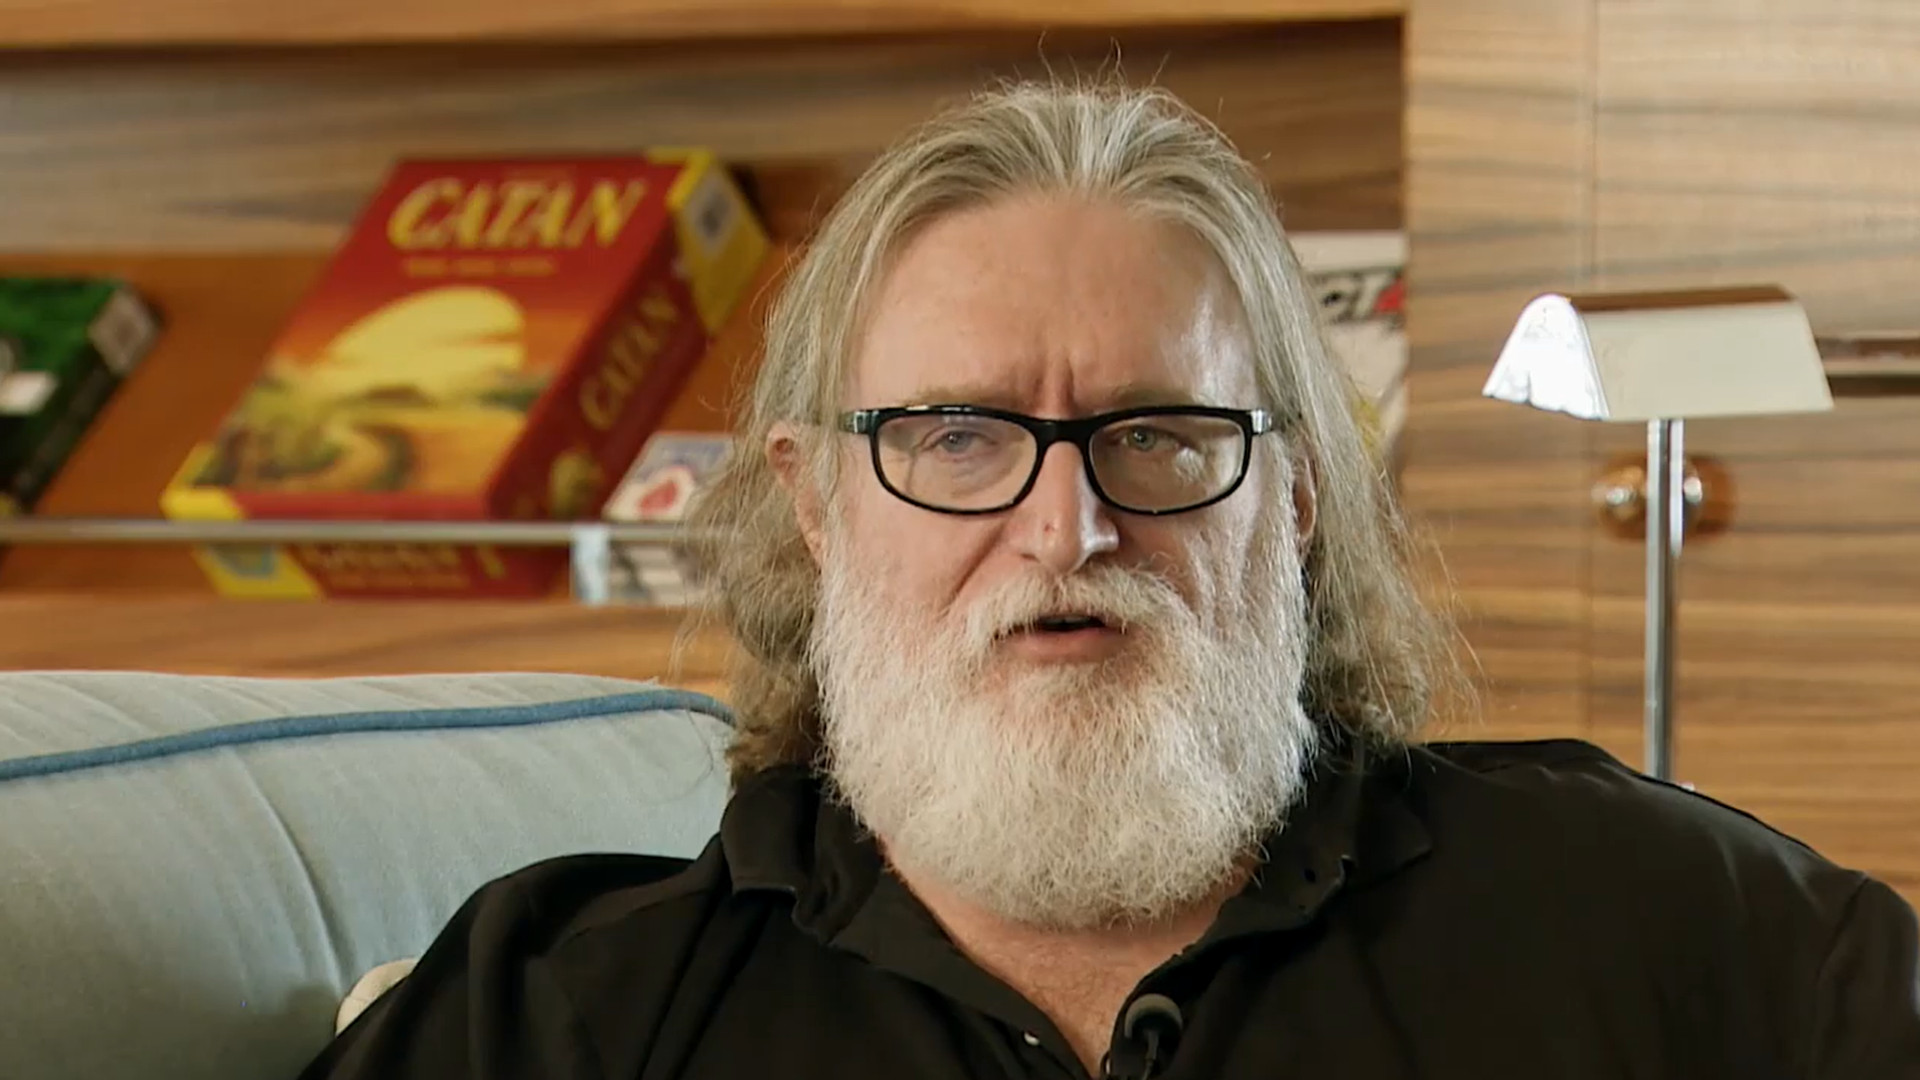 Gabe Newell to Talk Tues, [H]ard